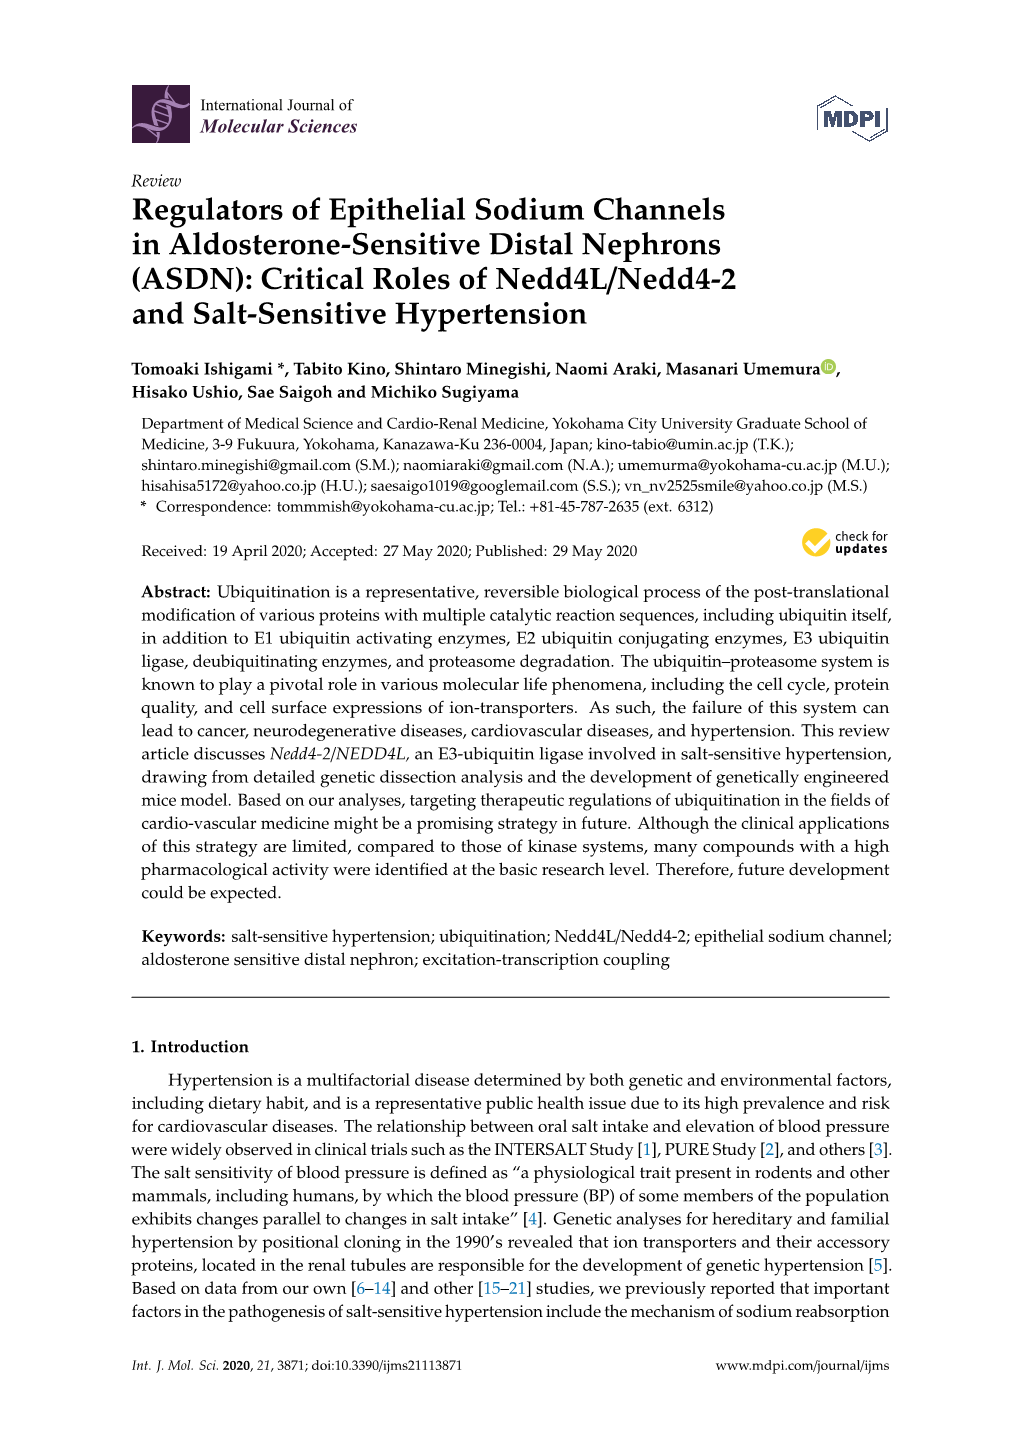 Regulators of Epithelial Sodium Channels in Aldosterone-Sensitive Distal Nephrons (ASDN): Critical Roles of Nedd4l/Nedd4-2 and Salt-Sensitive Hypertension